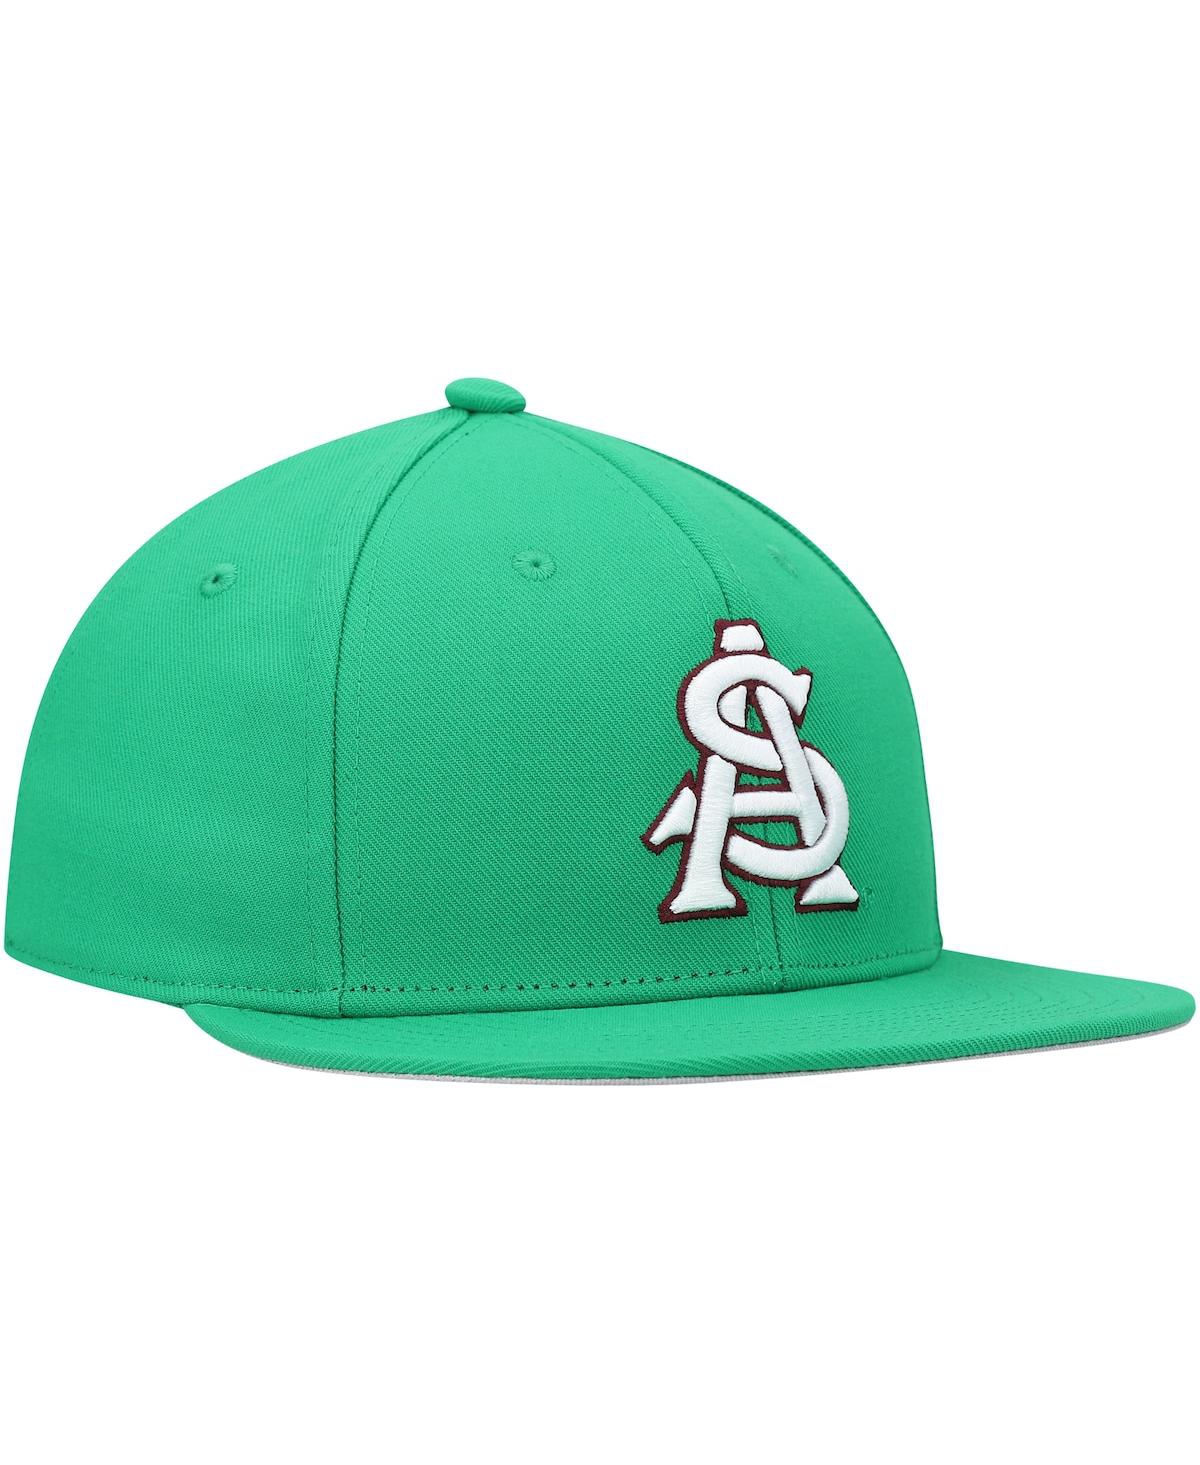 Shop Adidas Originals Men's Adidas Green Arizona State Sun Devils On-field Baseball Fitted Hat